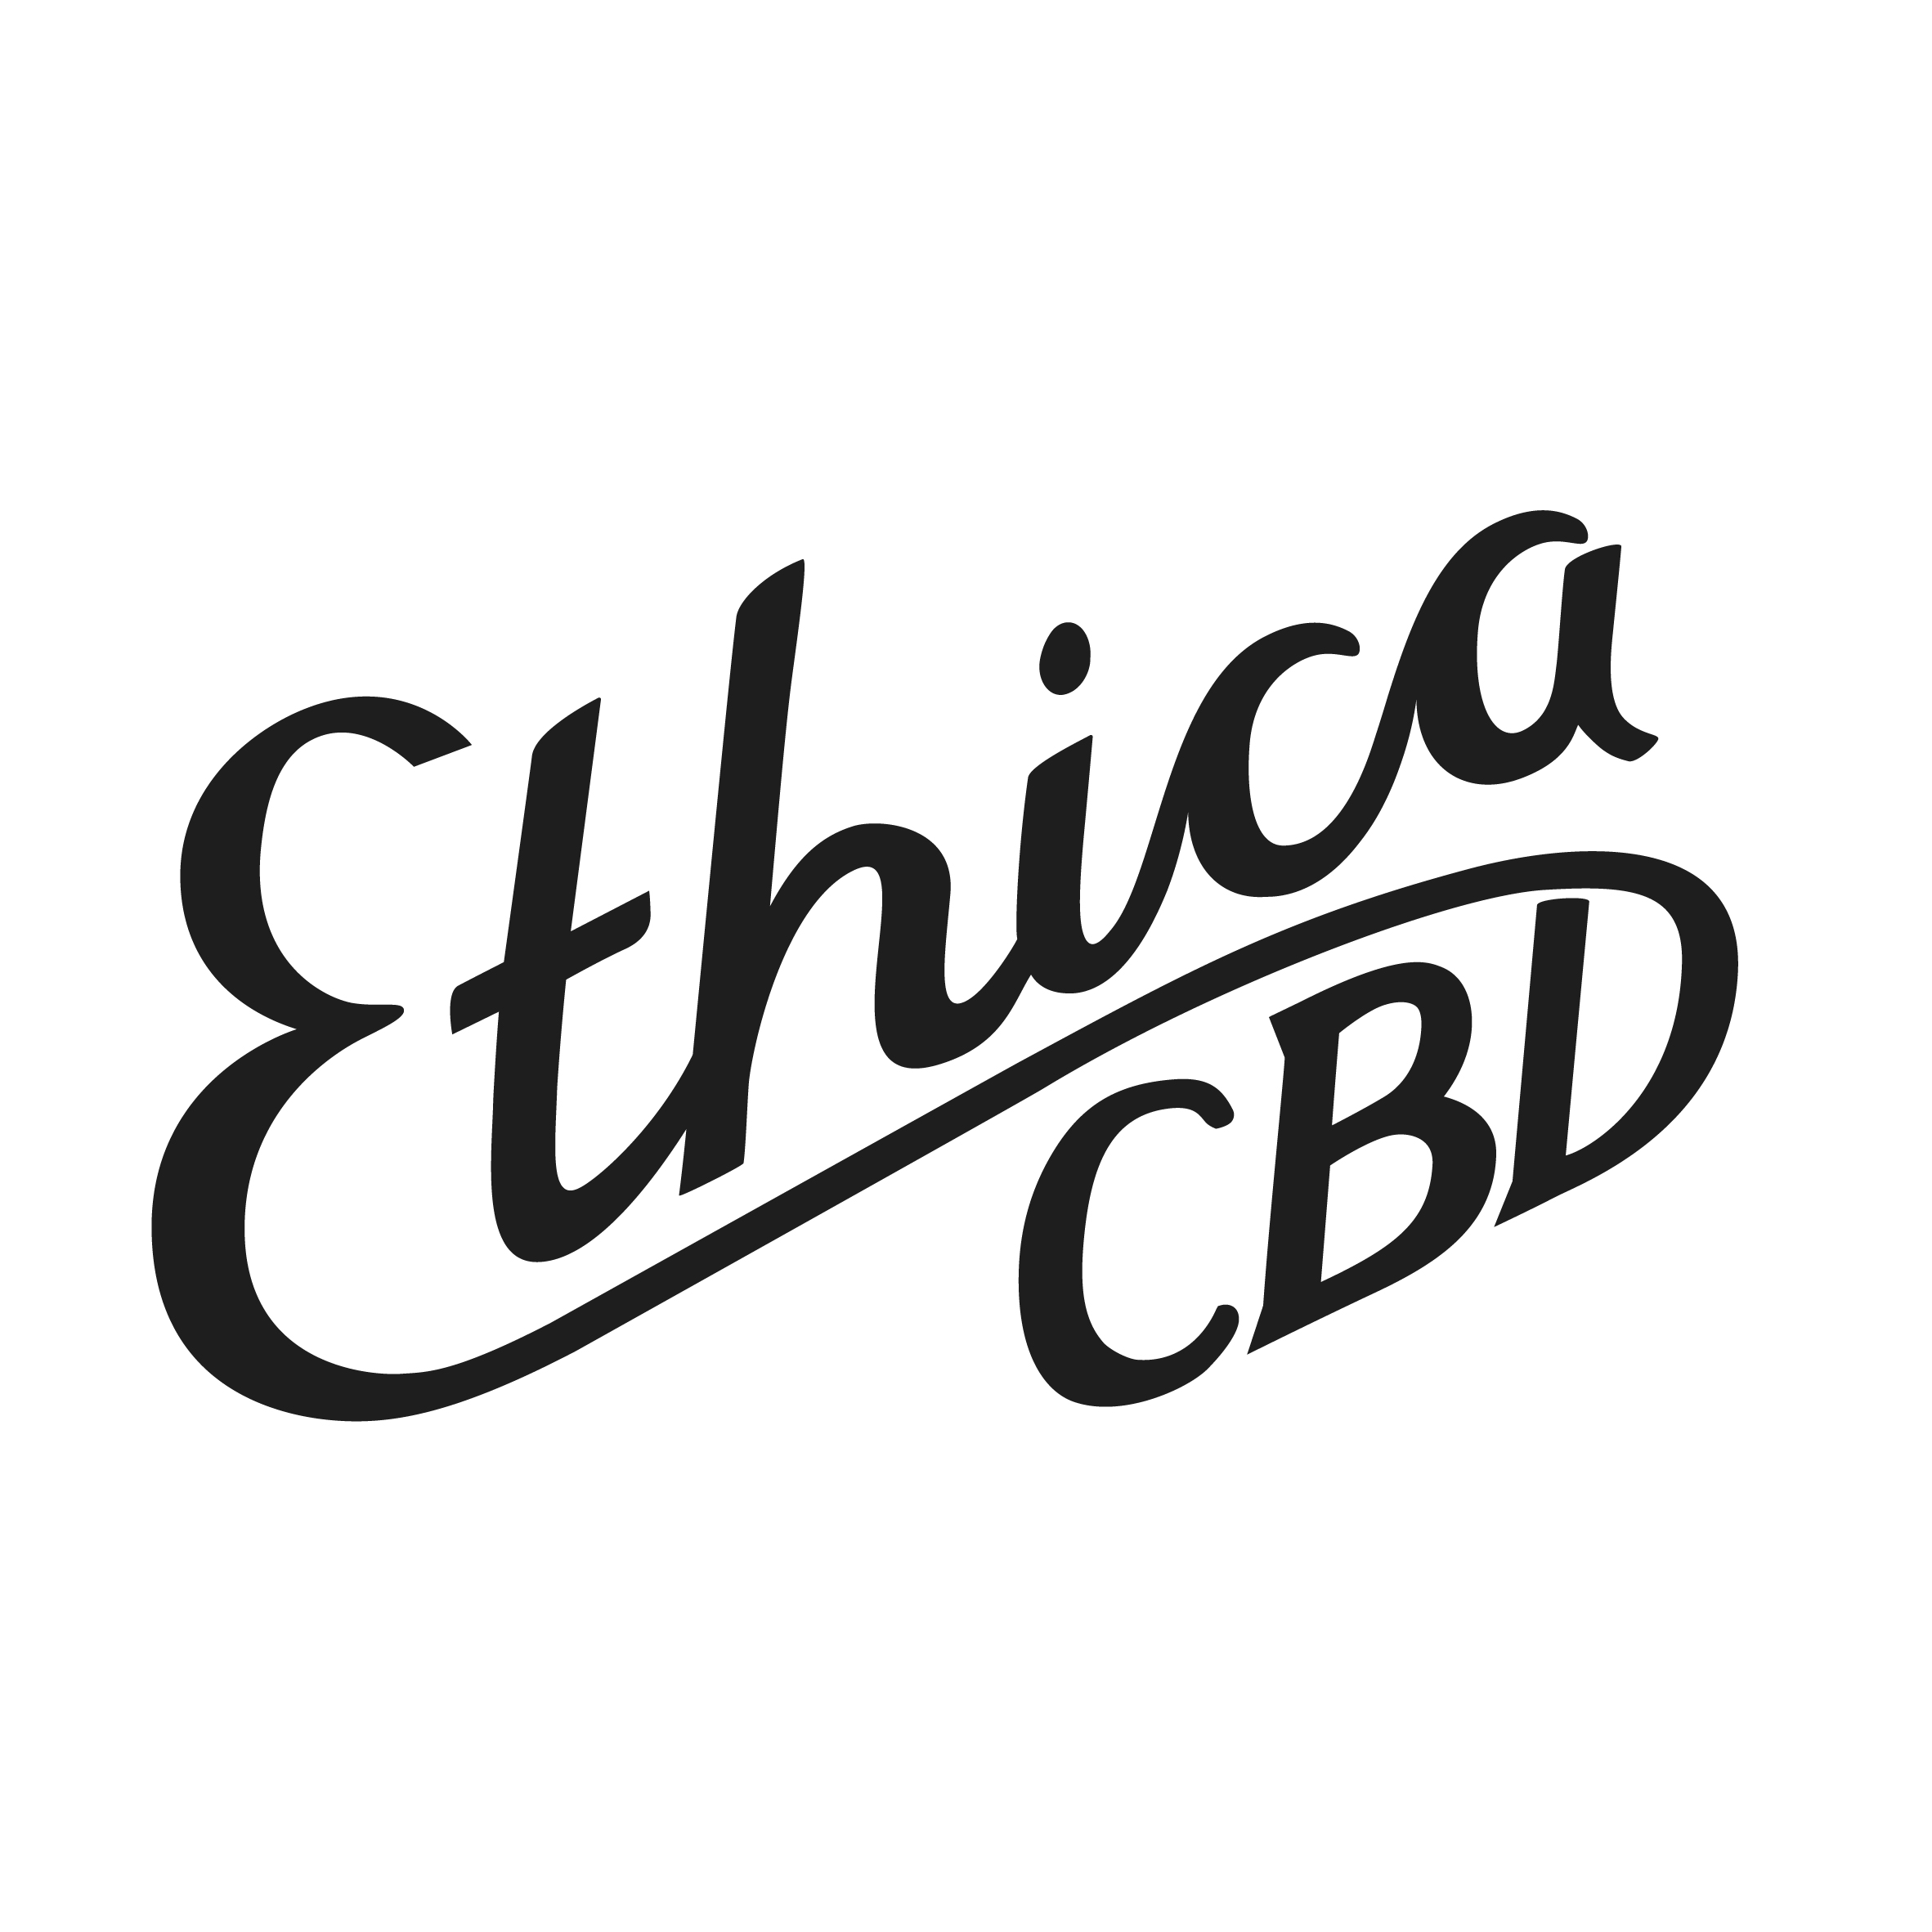 EthicaCBD Logo